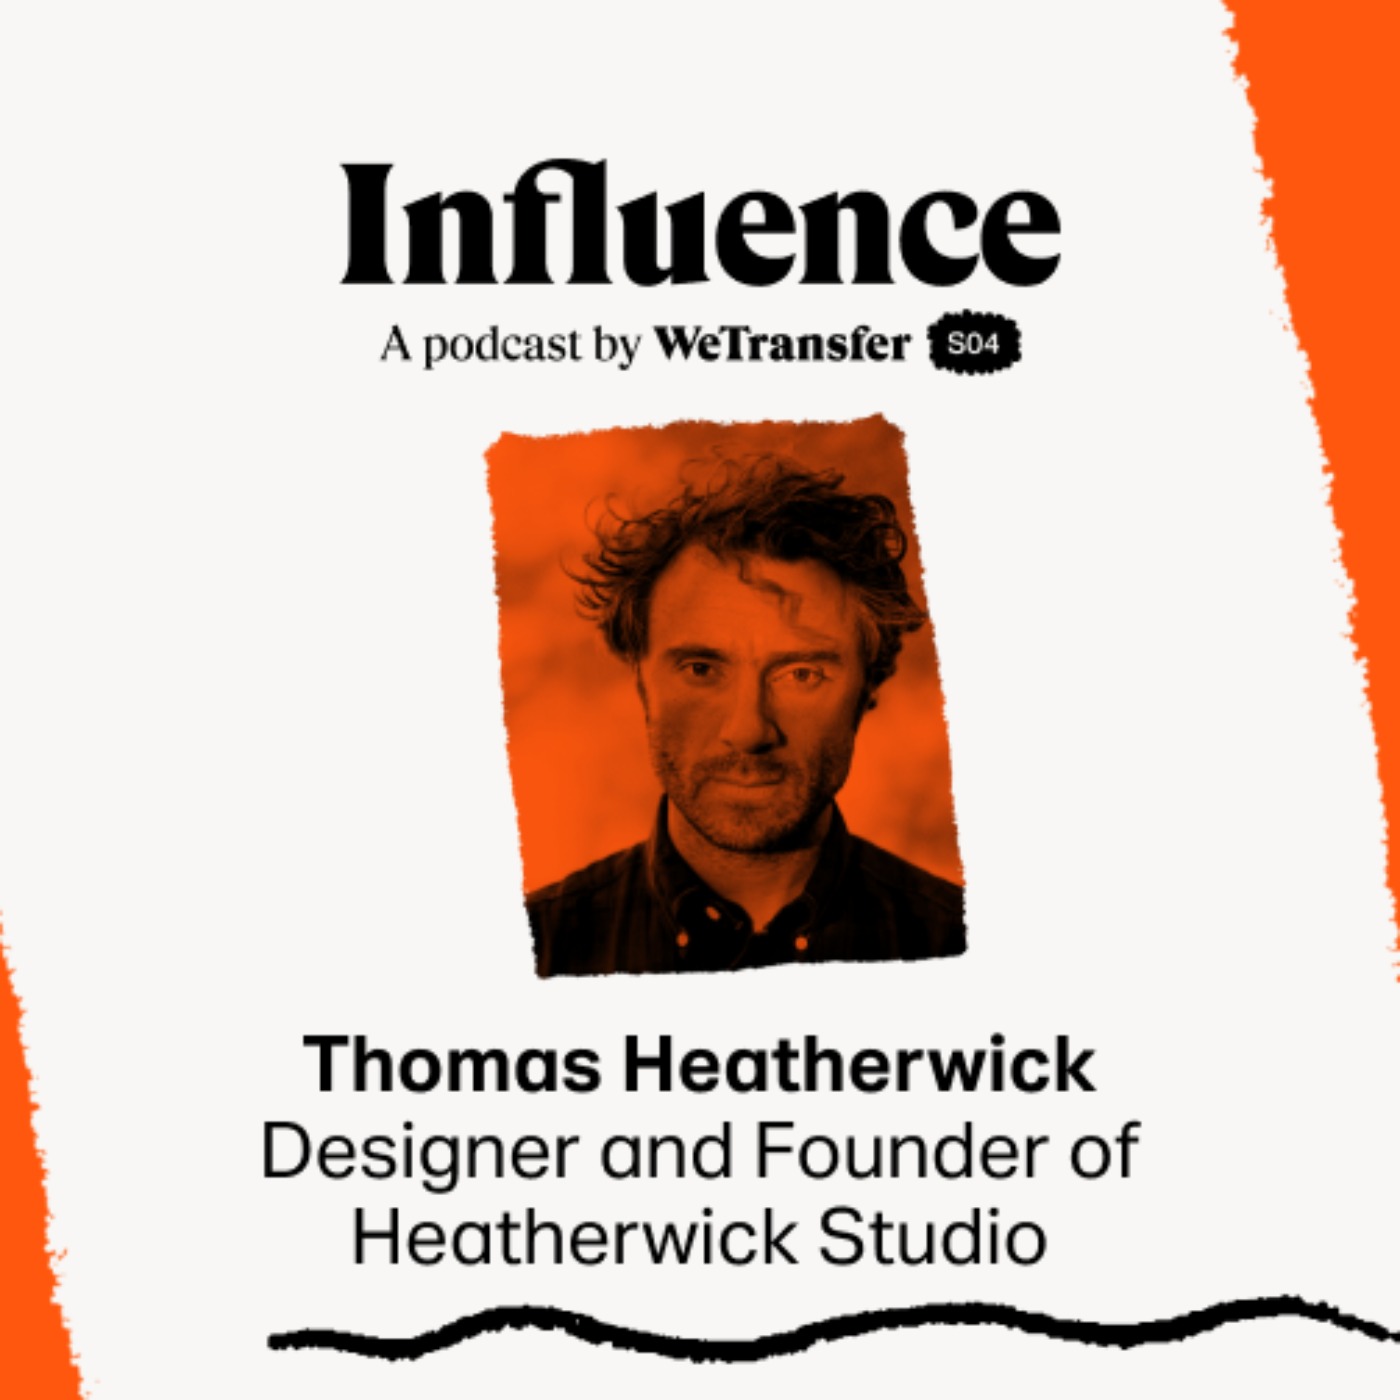 Thomas Heatherwick on Human-Centered Architecture